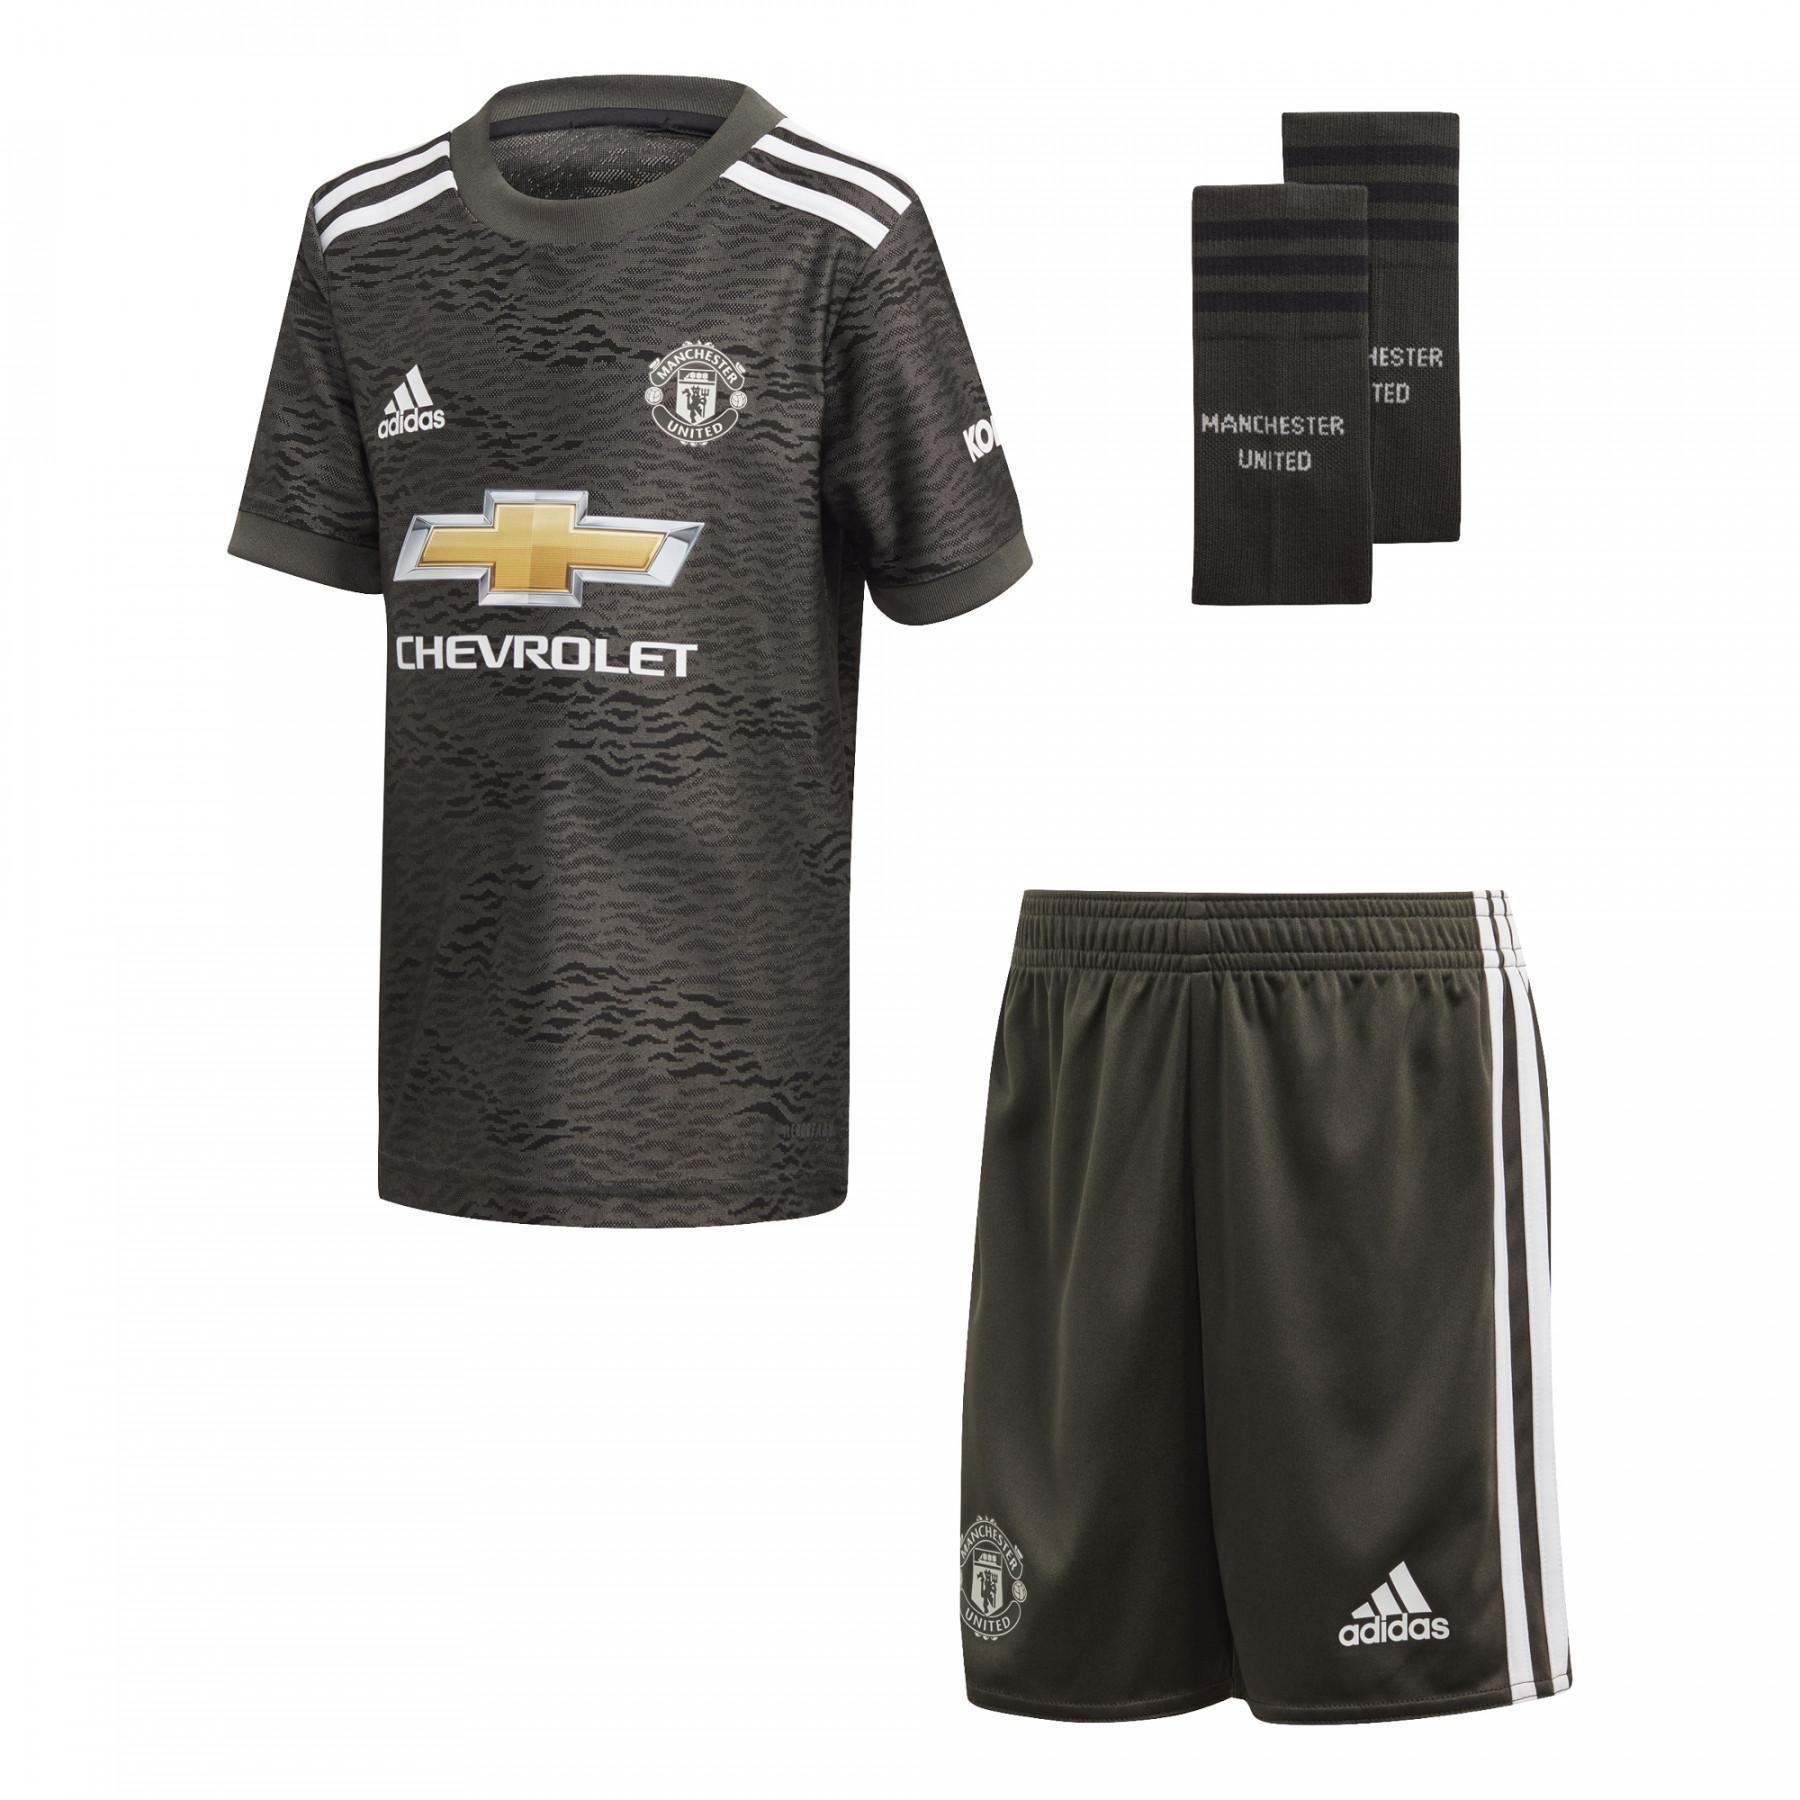 Mini kit kind buiten Manchester United 2020/21